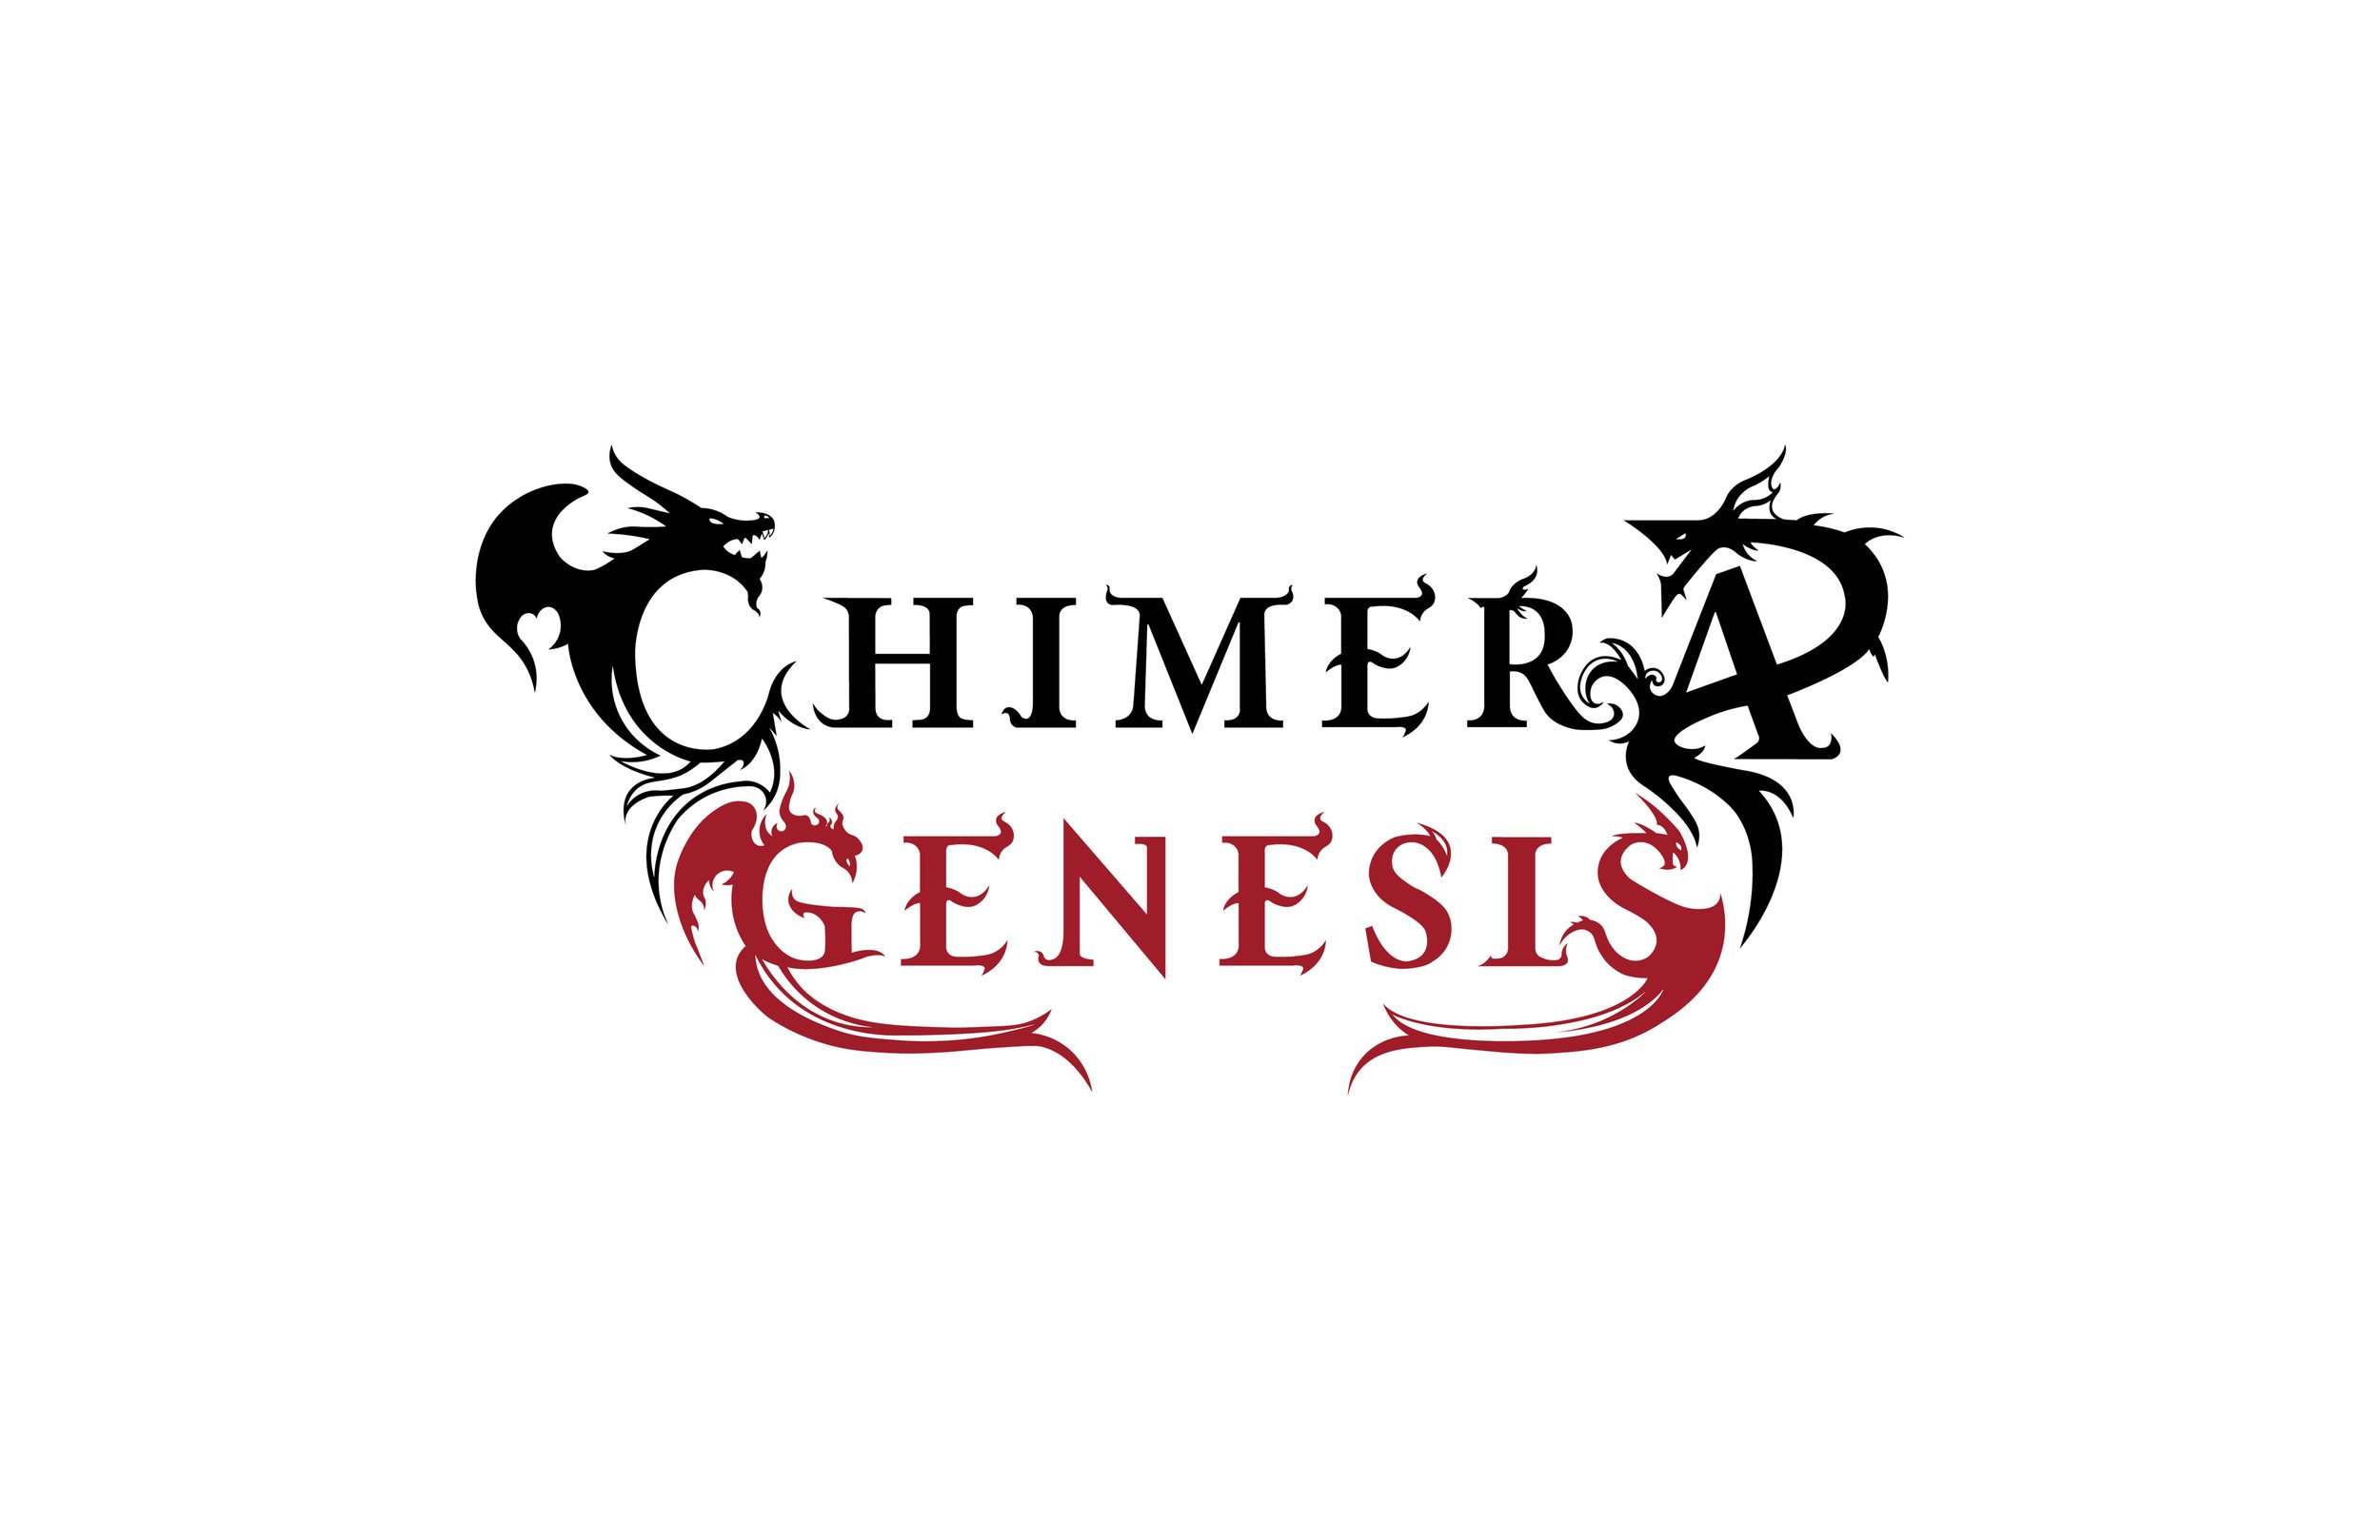 Chimera_genesis_Title_Updated_1.jpg